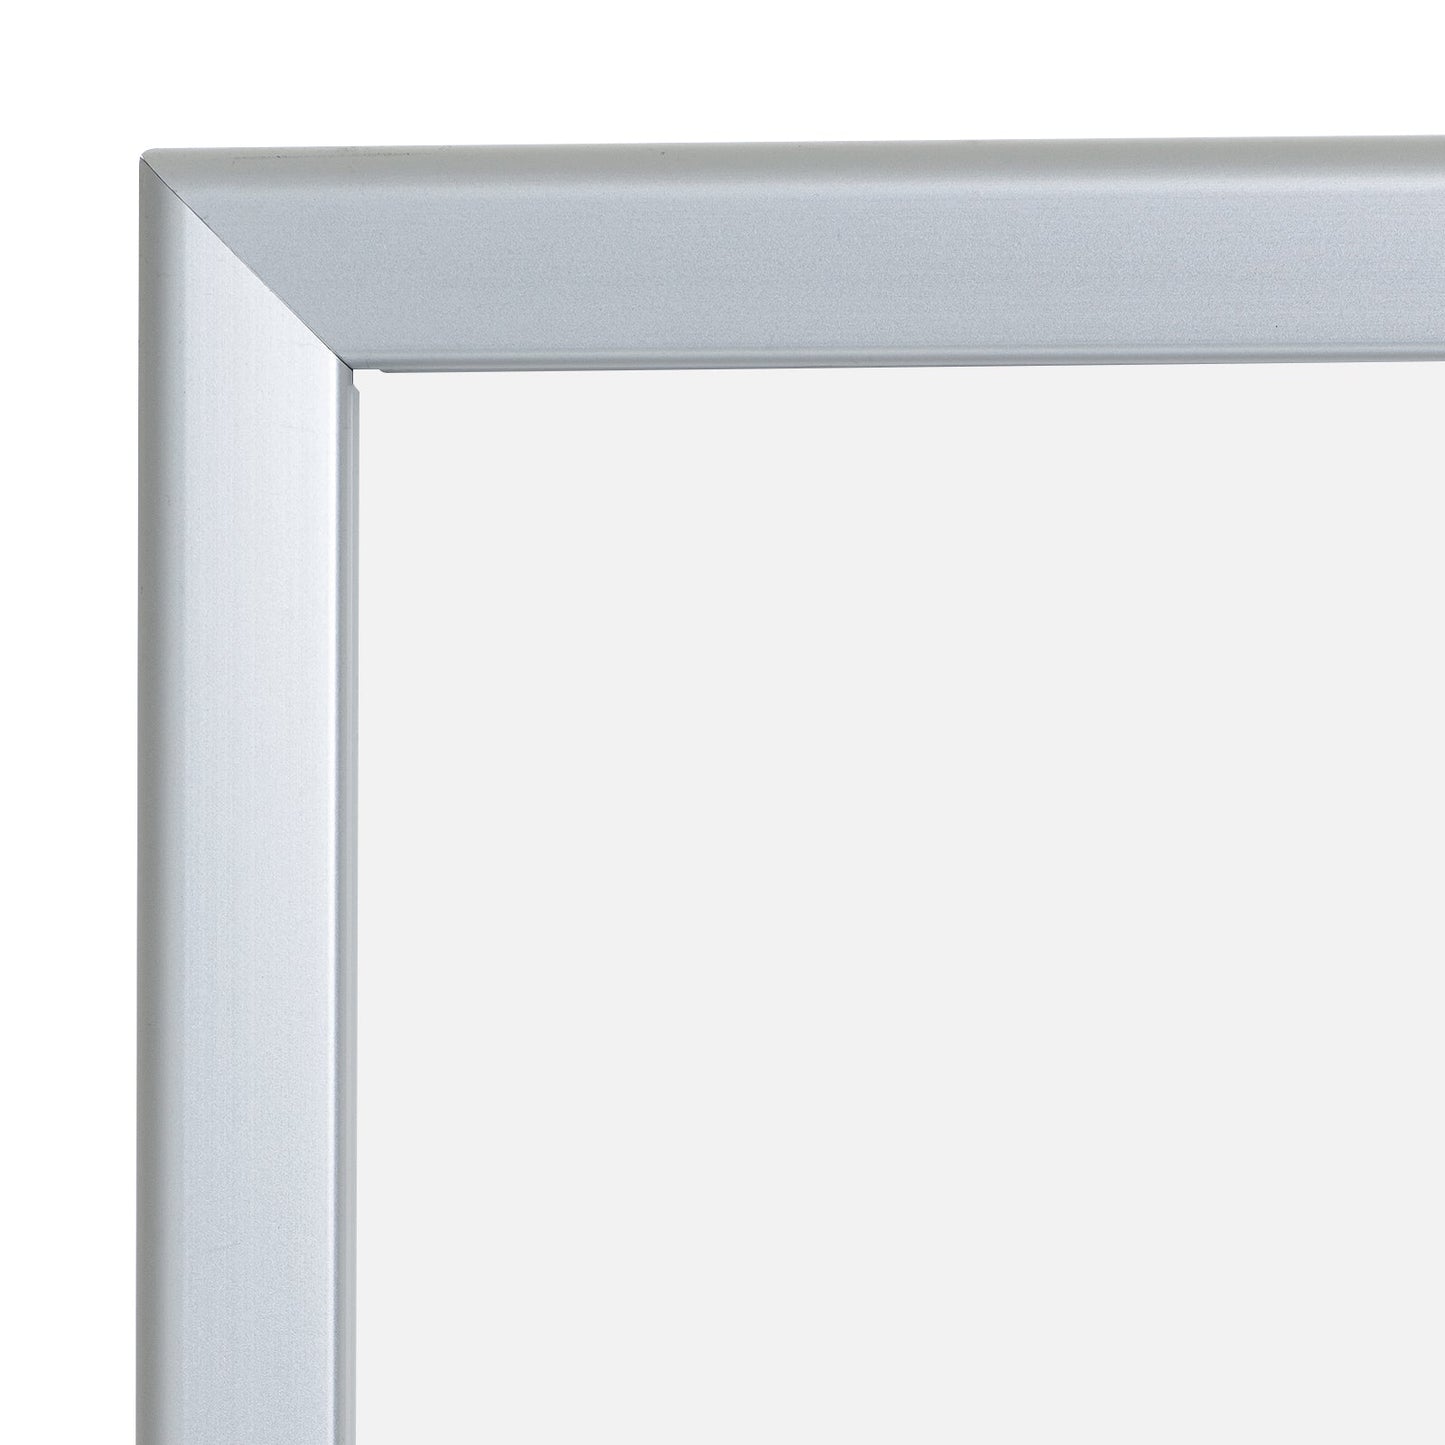 36x36 Silver SnapeZo® Snap Frame - 1.25" Profile